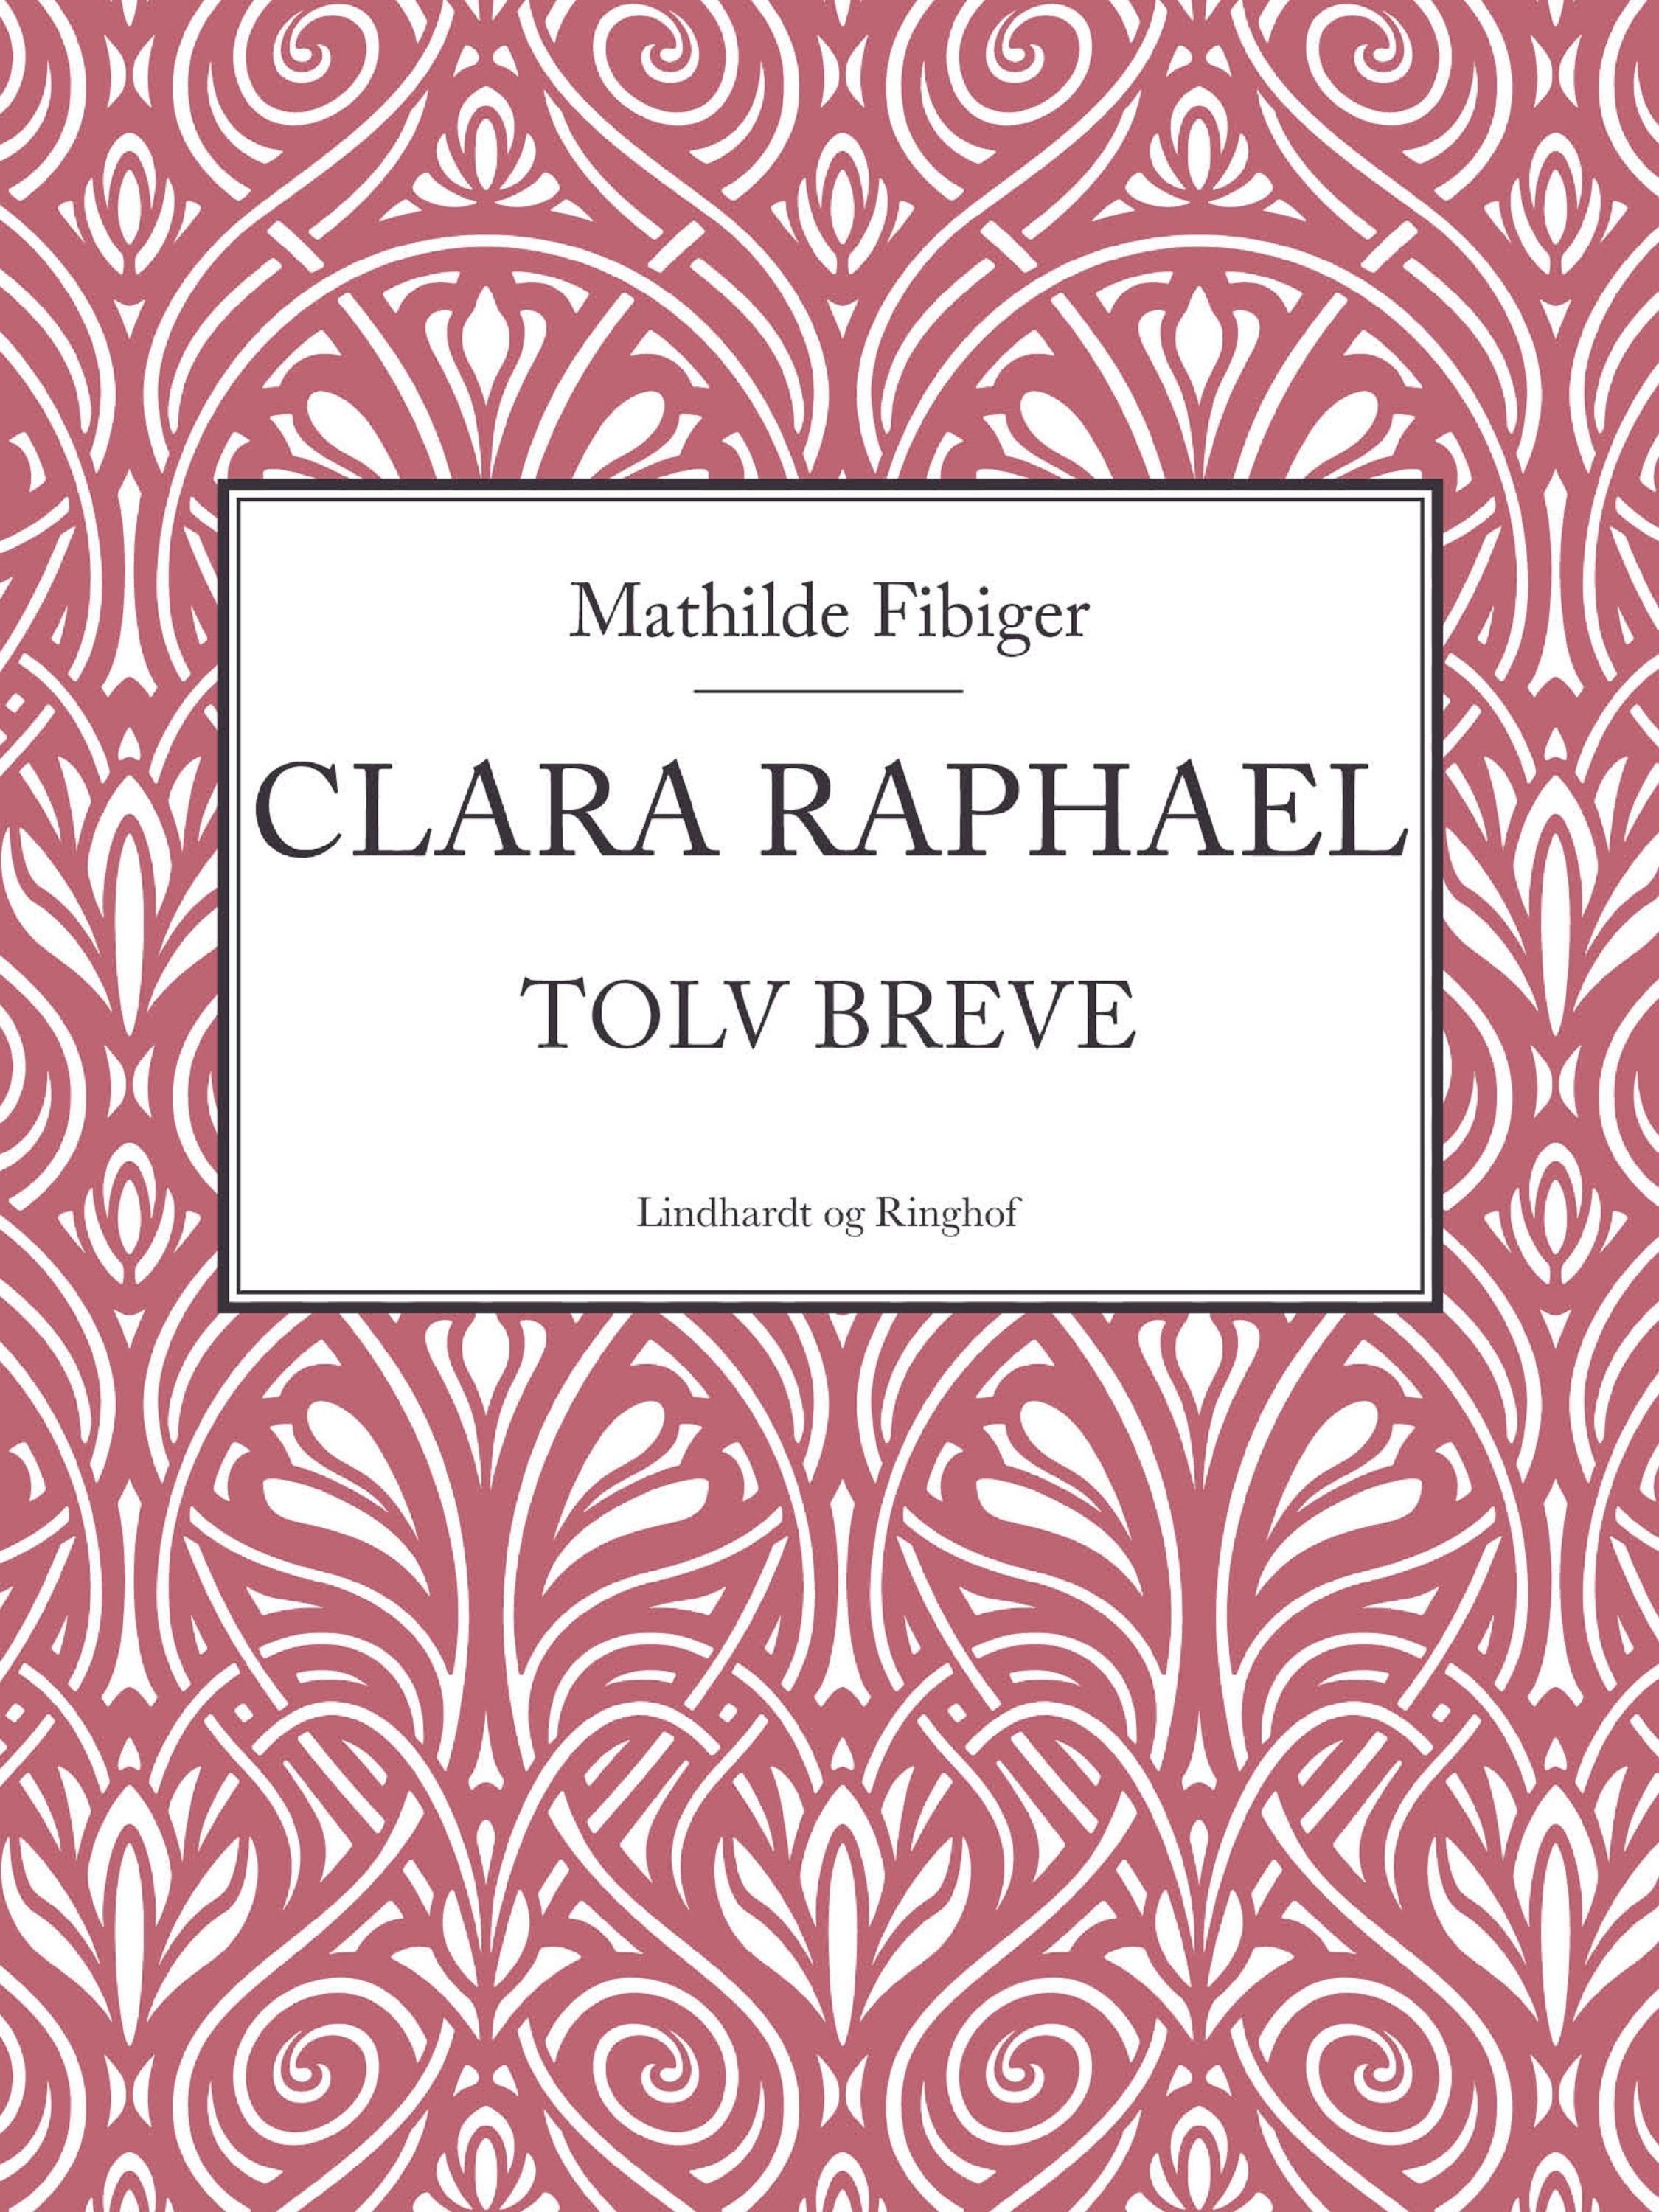 Clara Raphael, audiobook by Mathilde Fibiger